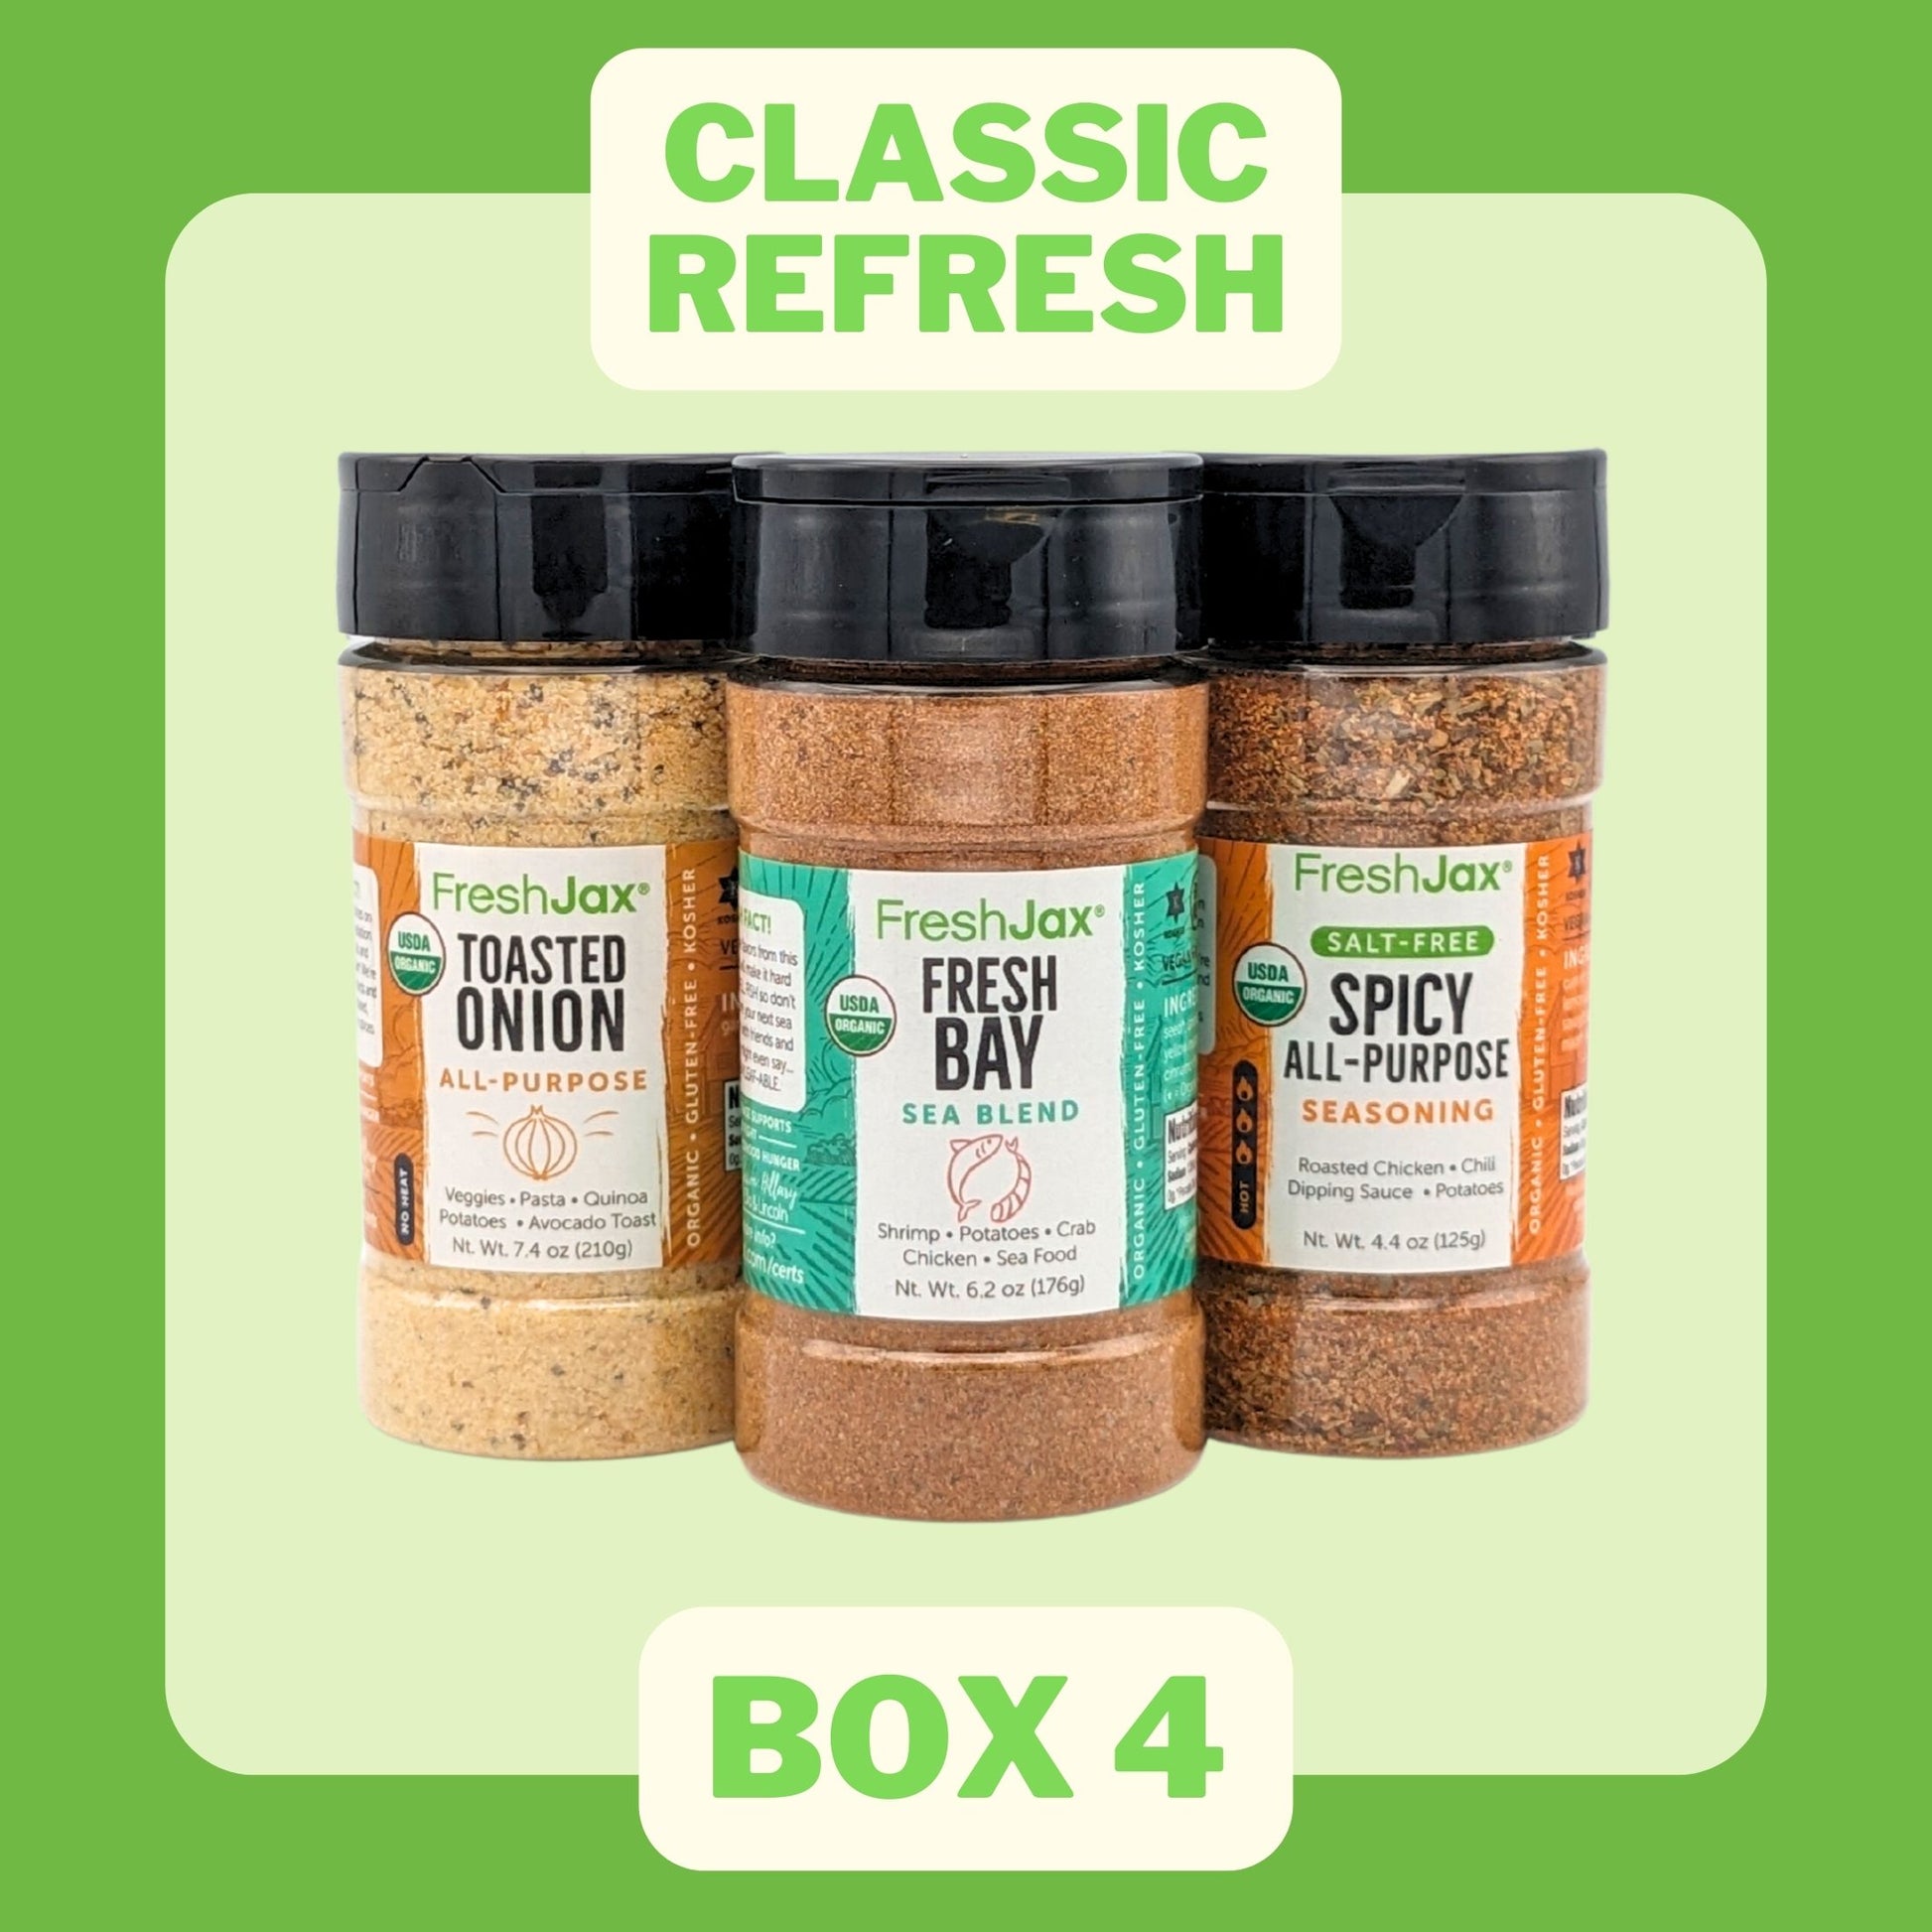 FreshJax Classic ReFresh - Box 4 : Toasted Onion, Fresh Bay, Spicy All-Purpose